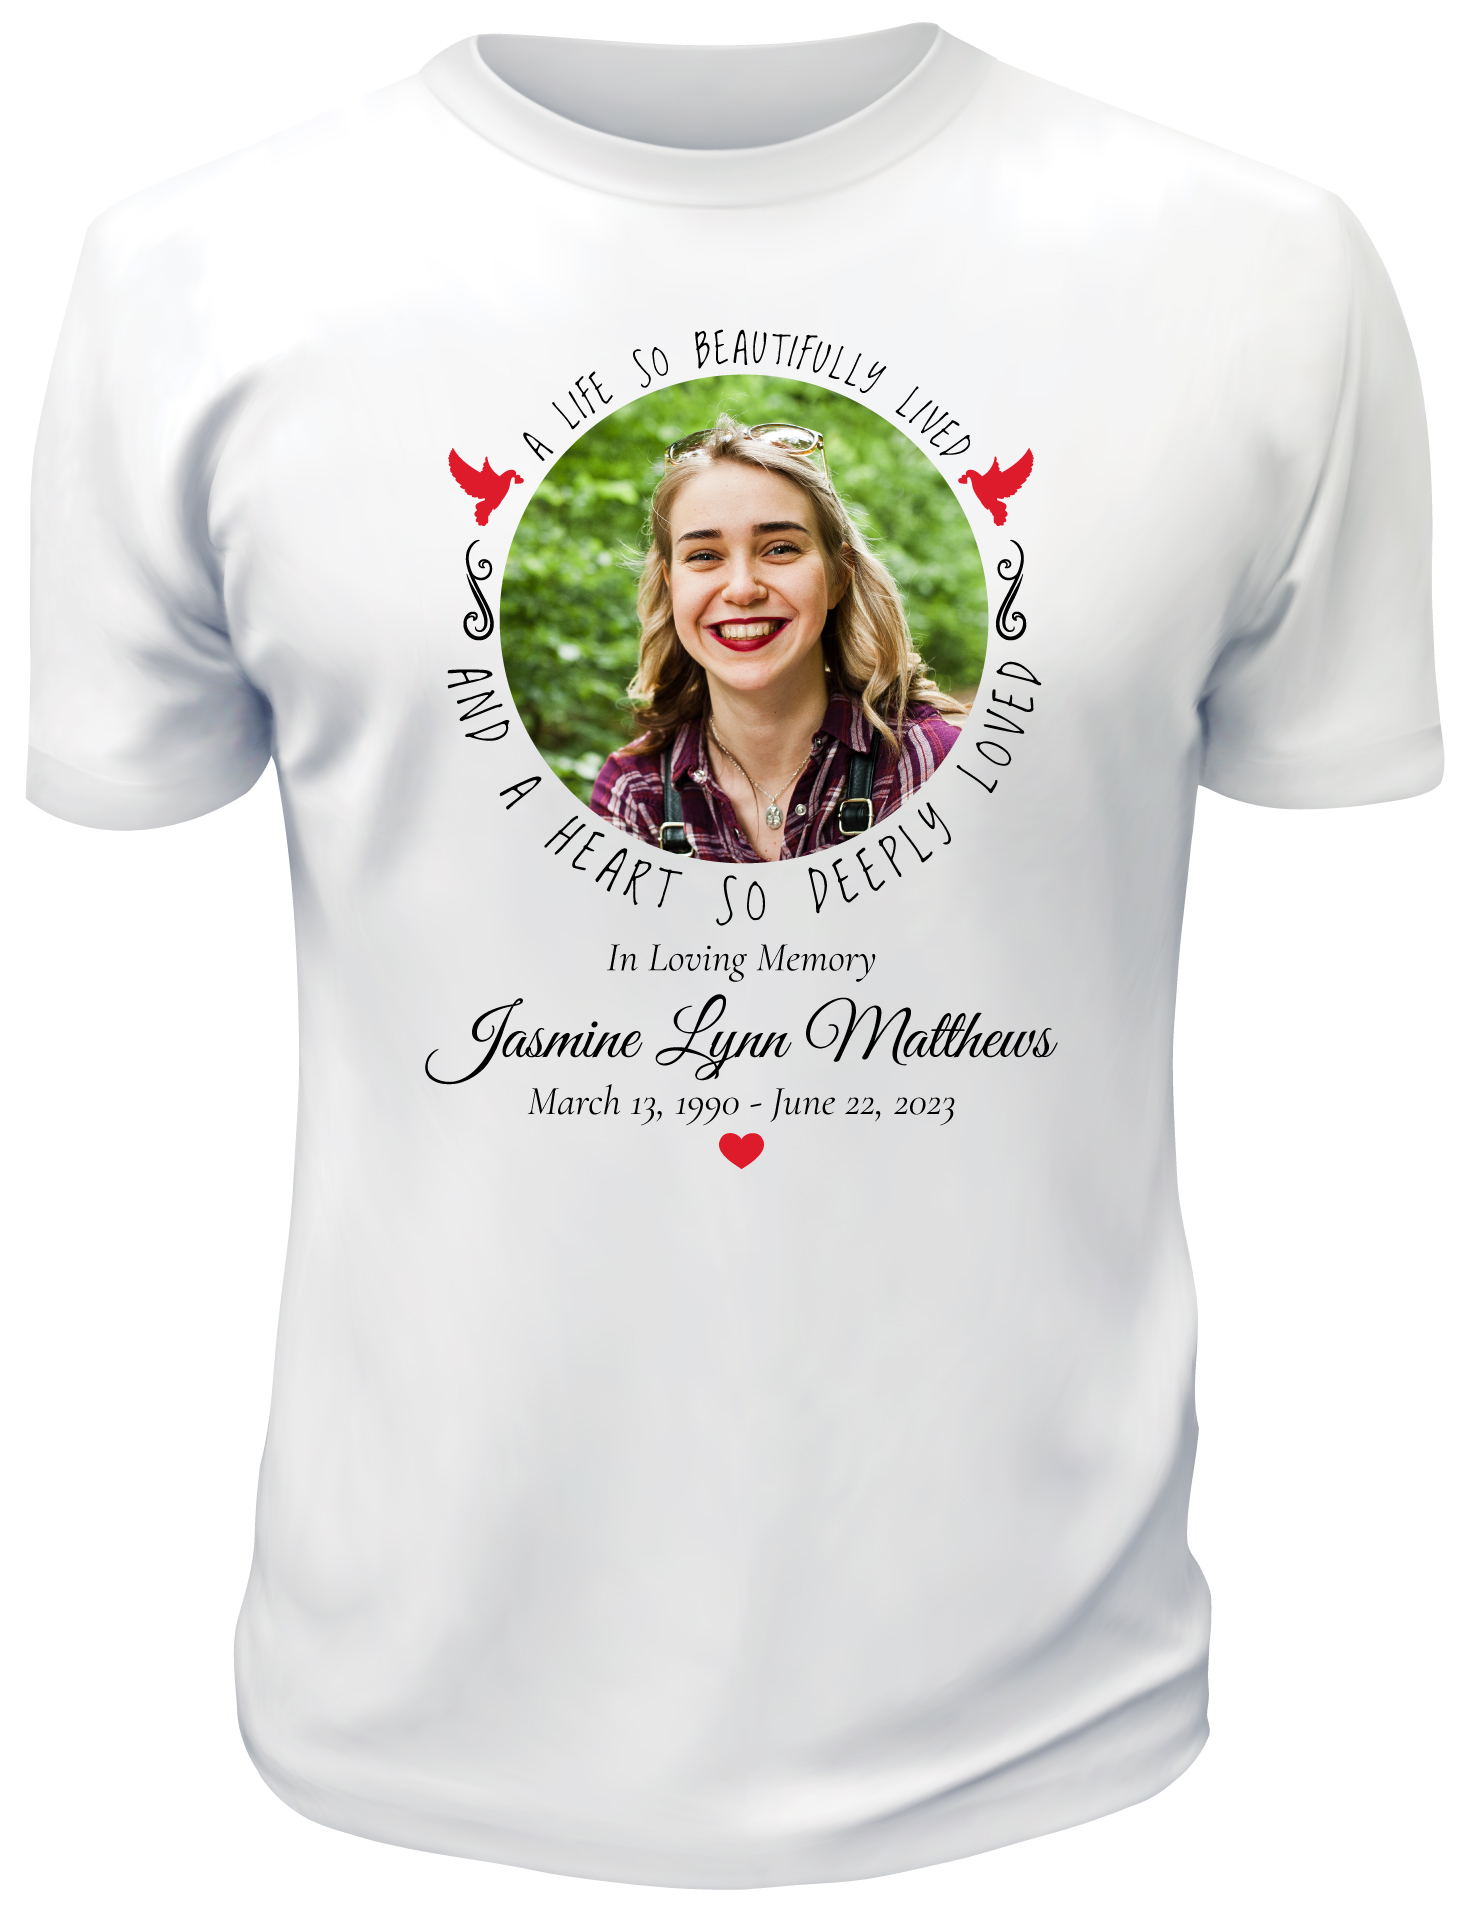 Rest In Peace In Loving Memory T-Shirt Teal Lights (Men-Women)